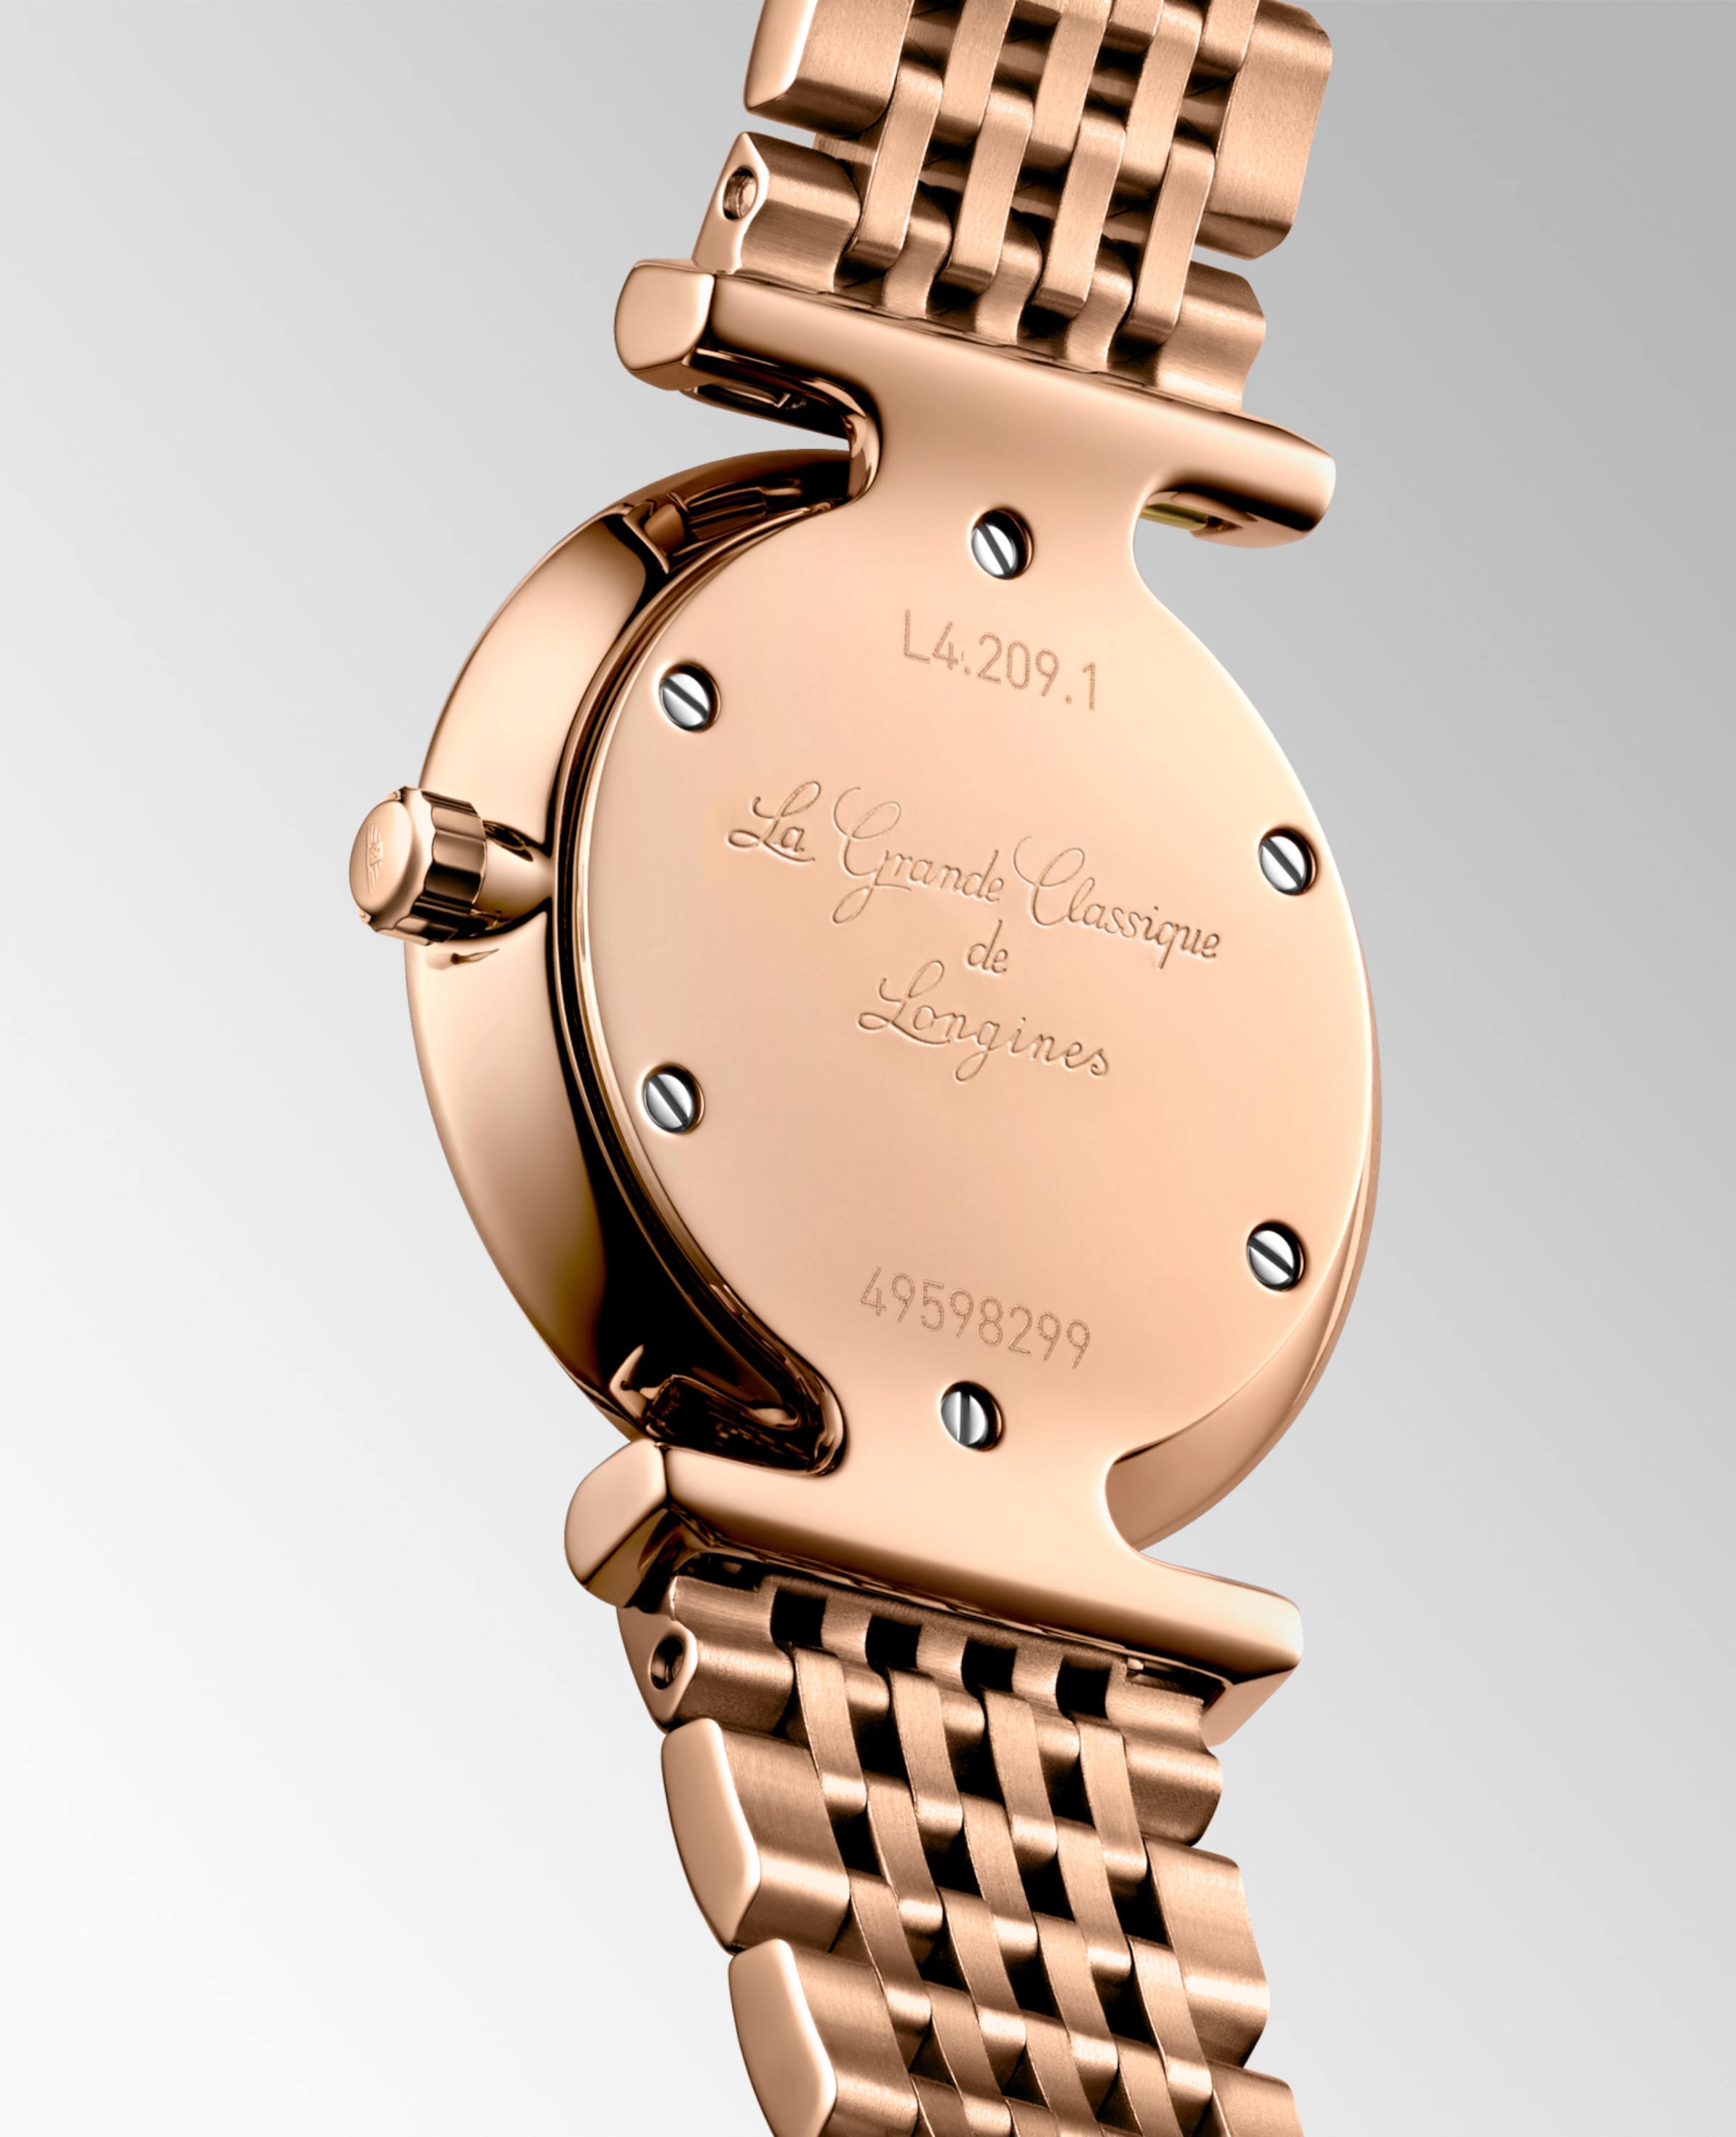 Longines LA GRANDE CLASSIQUE DE LONGINES Quartz Red PVD coating Watch - L4.209.1.90.8